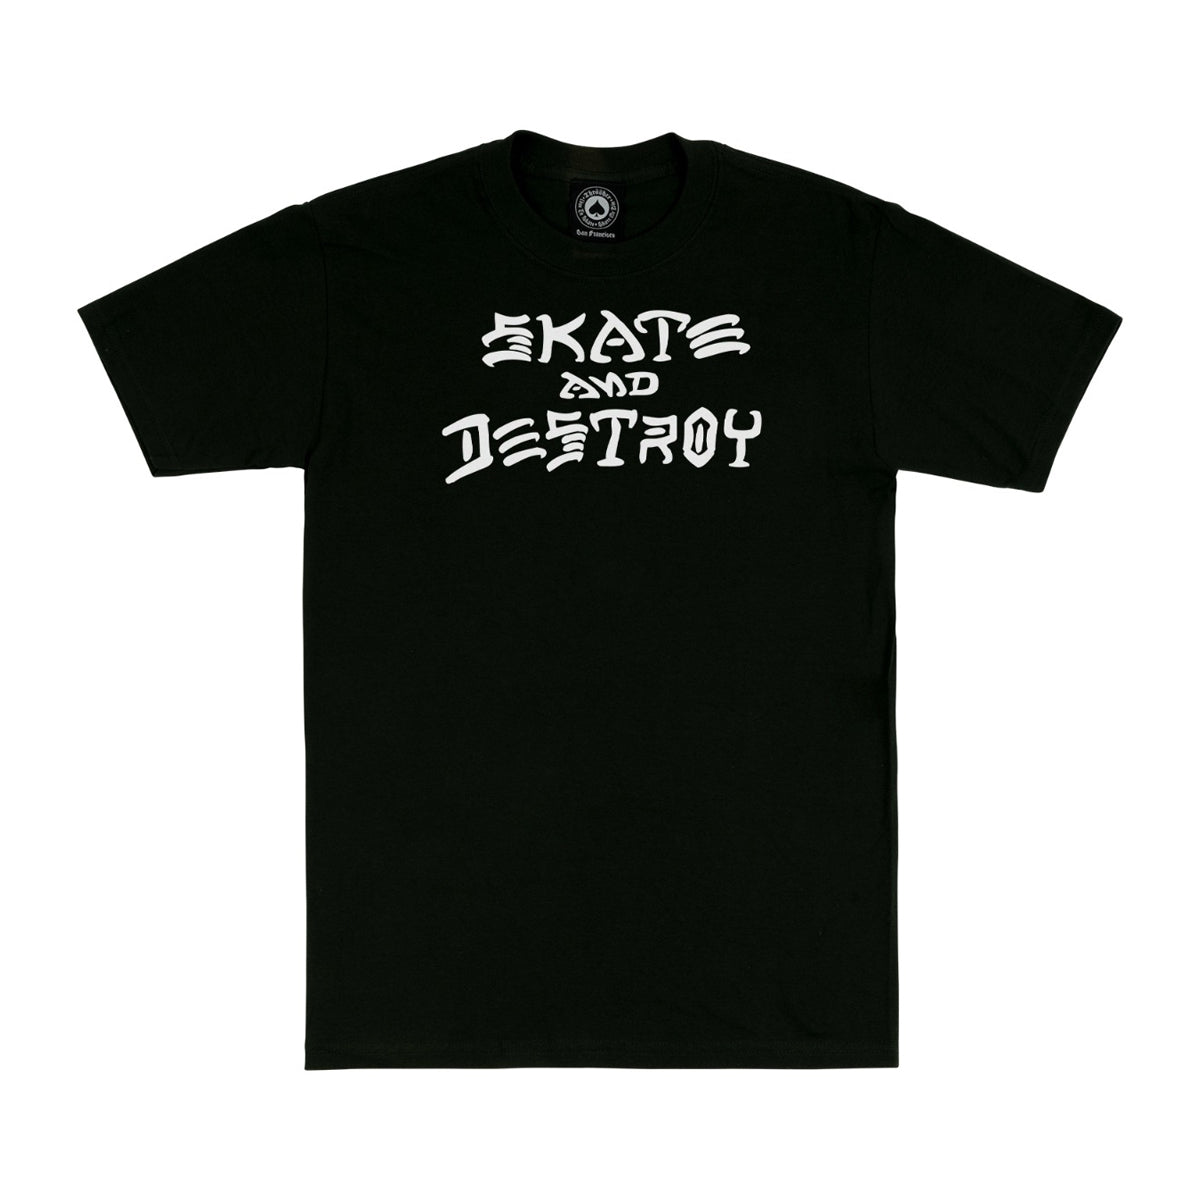 Thrasher Skate and Destroy Black T-Shirt